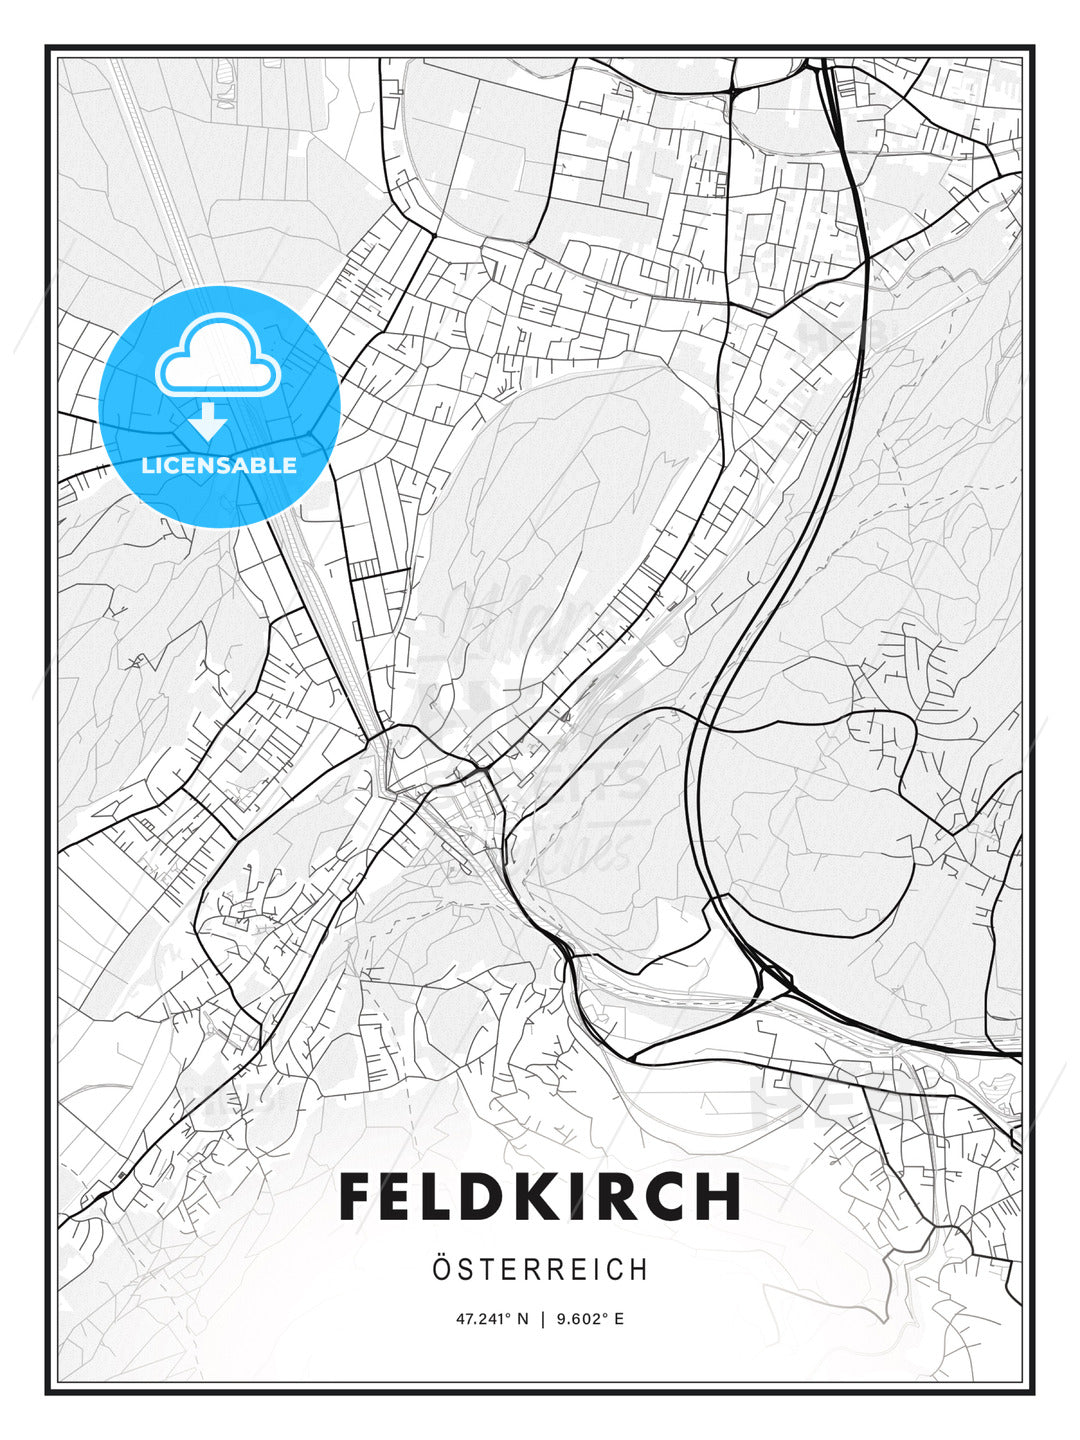 Feldkirch, Austria, Modern Print Template in Various Formats - HEBSTREITS Sketches